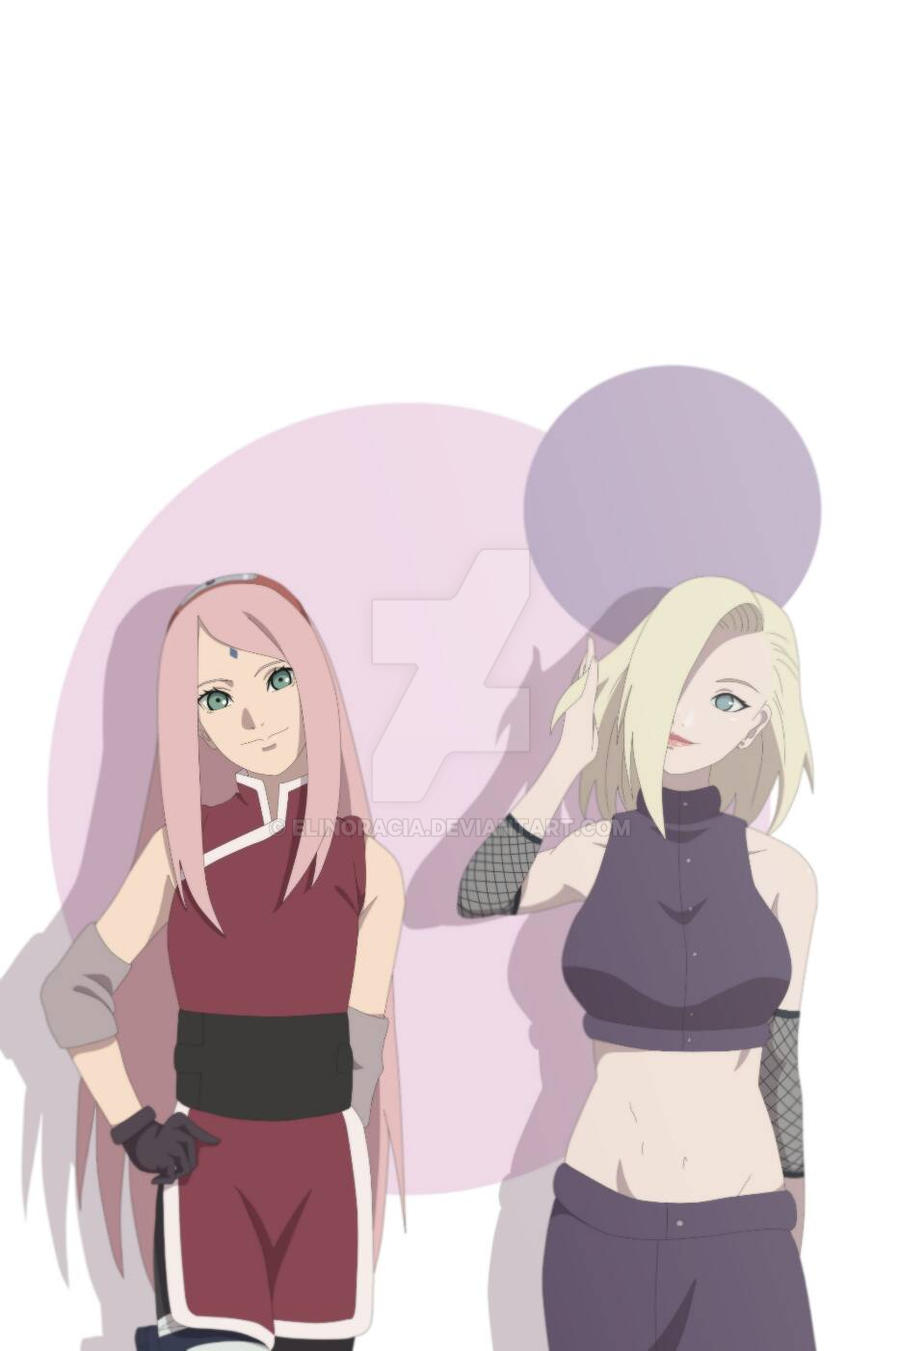 Sakura and Ino hair switch by elinoracia on DeviantArt